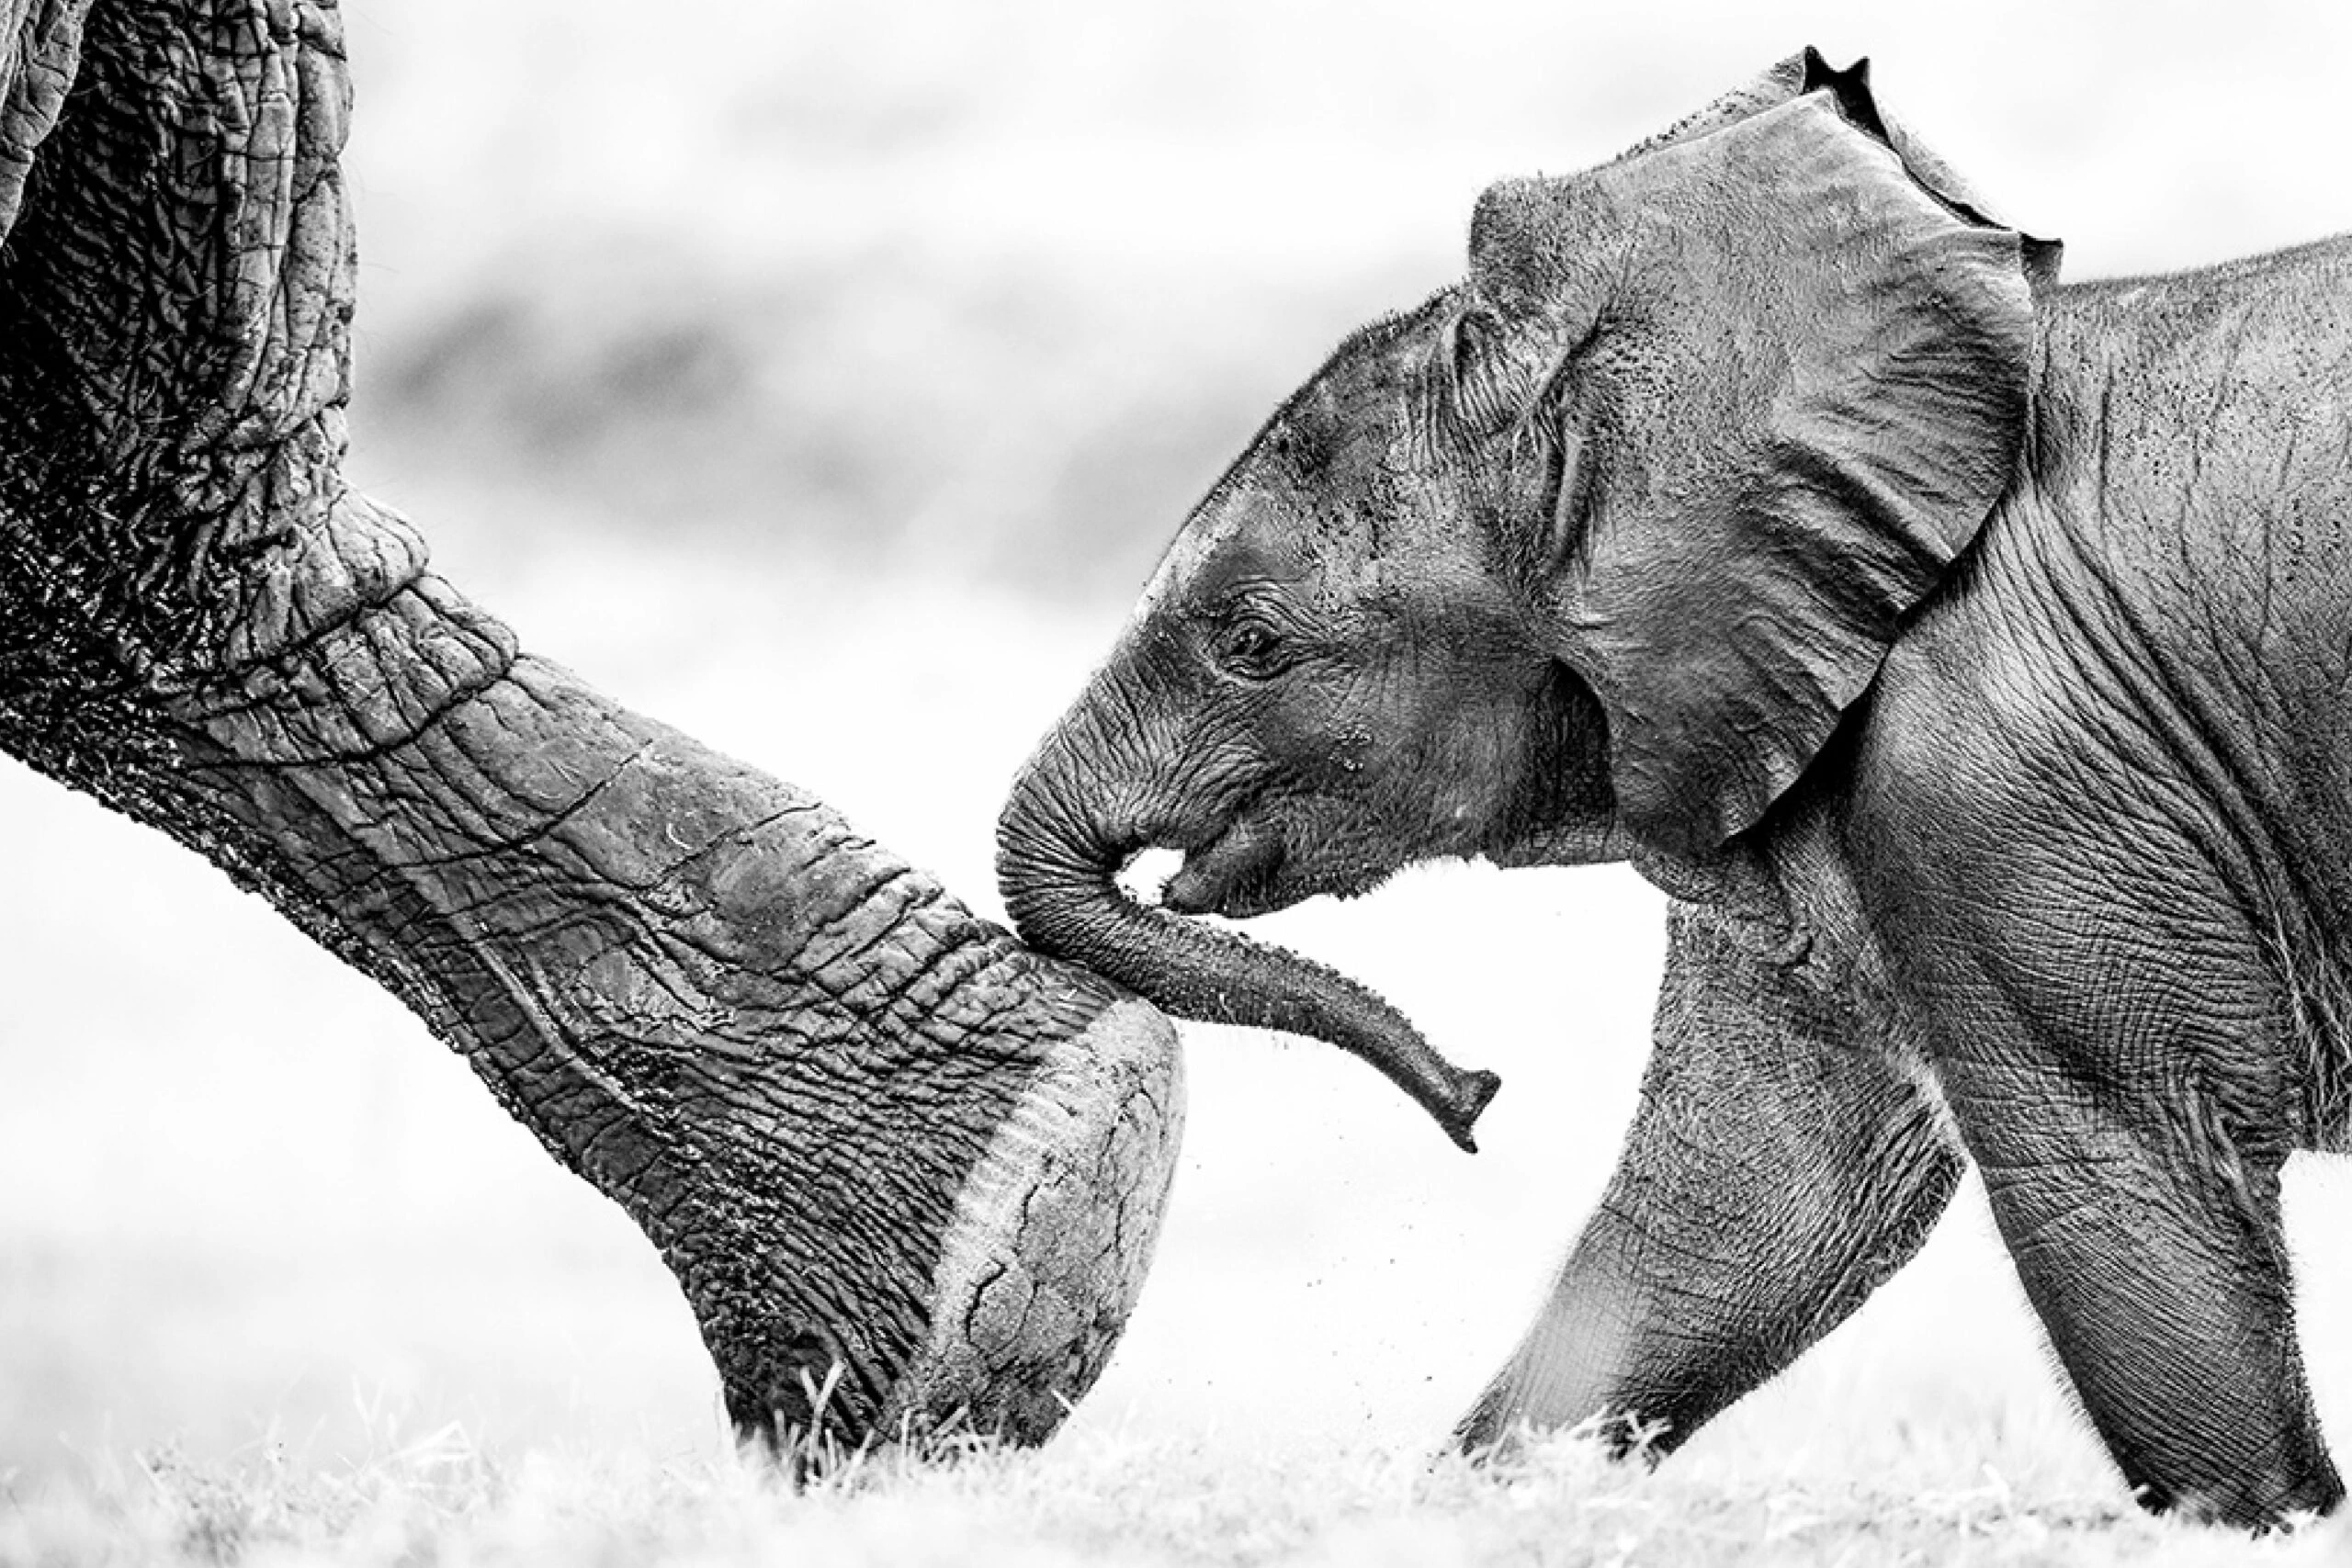 Calves & elephant photography by sabine stols